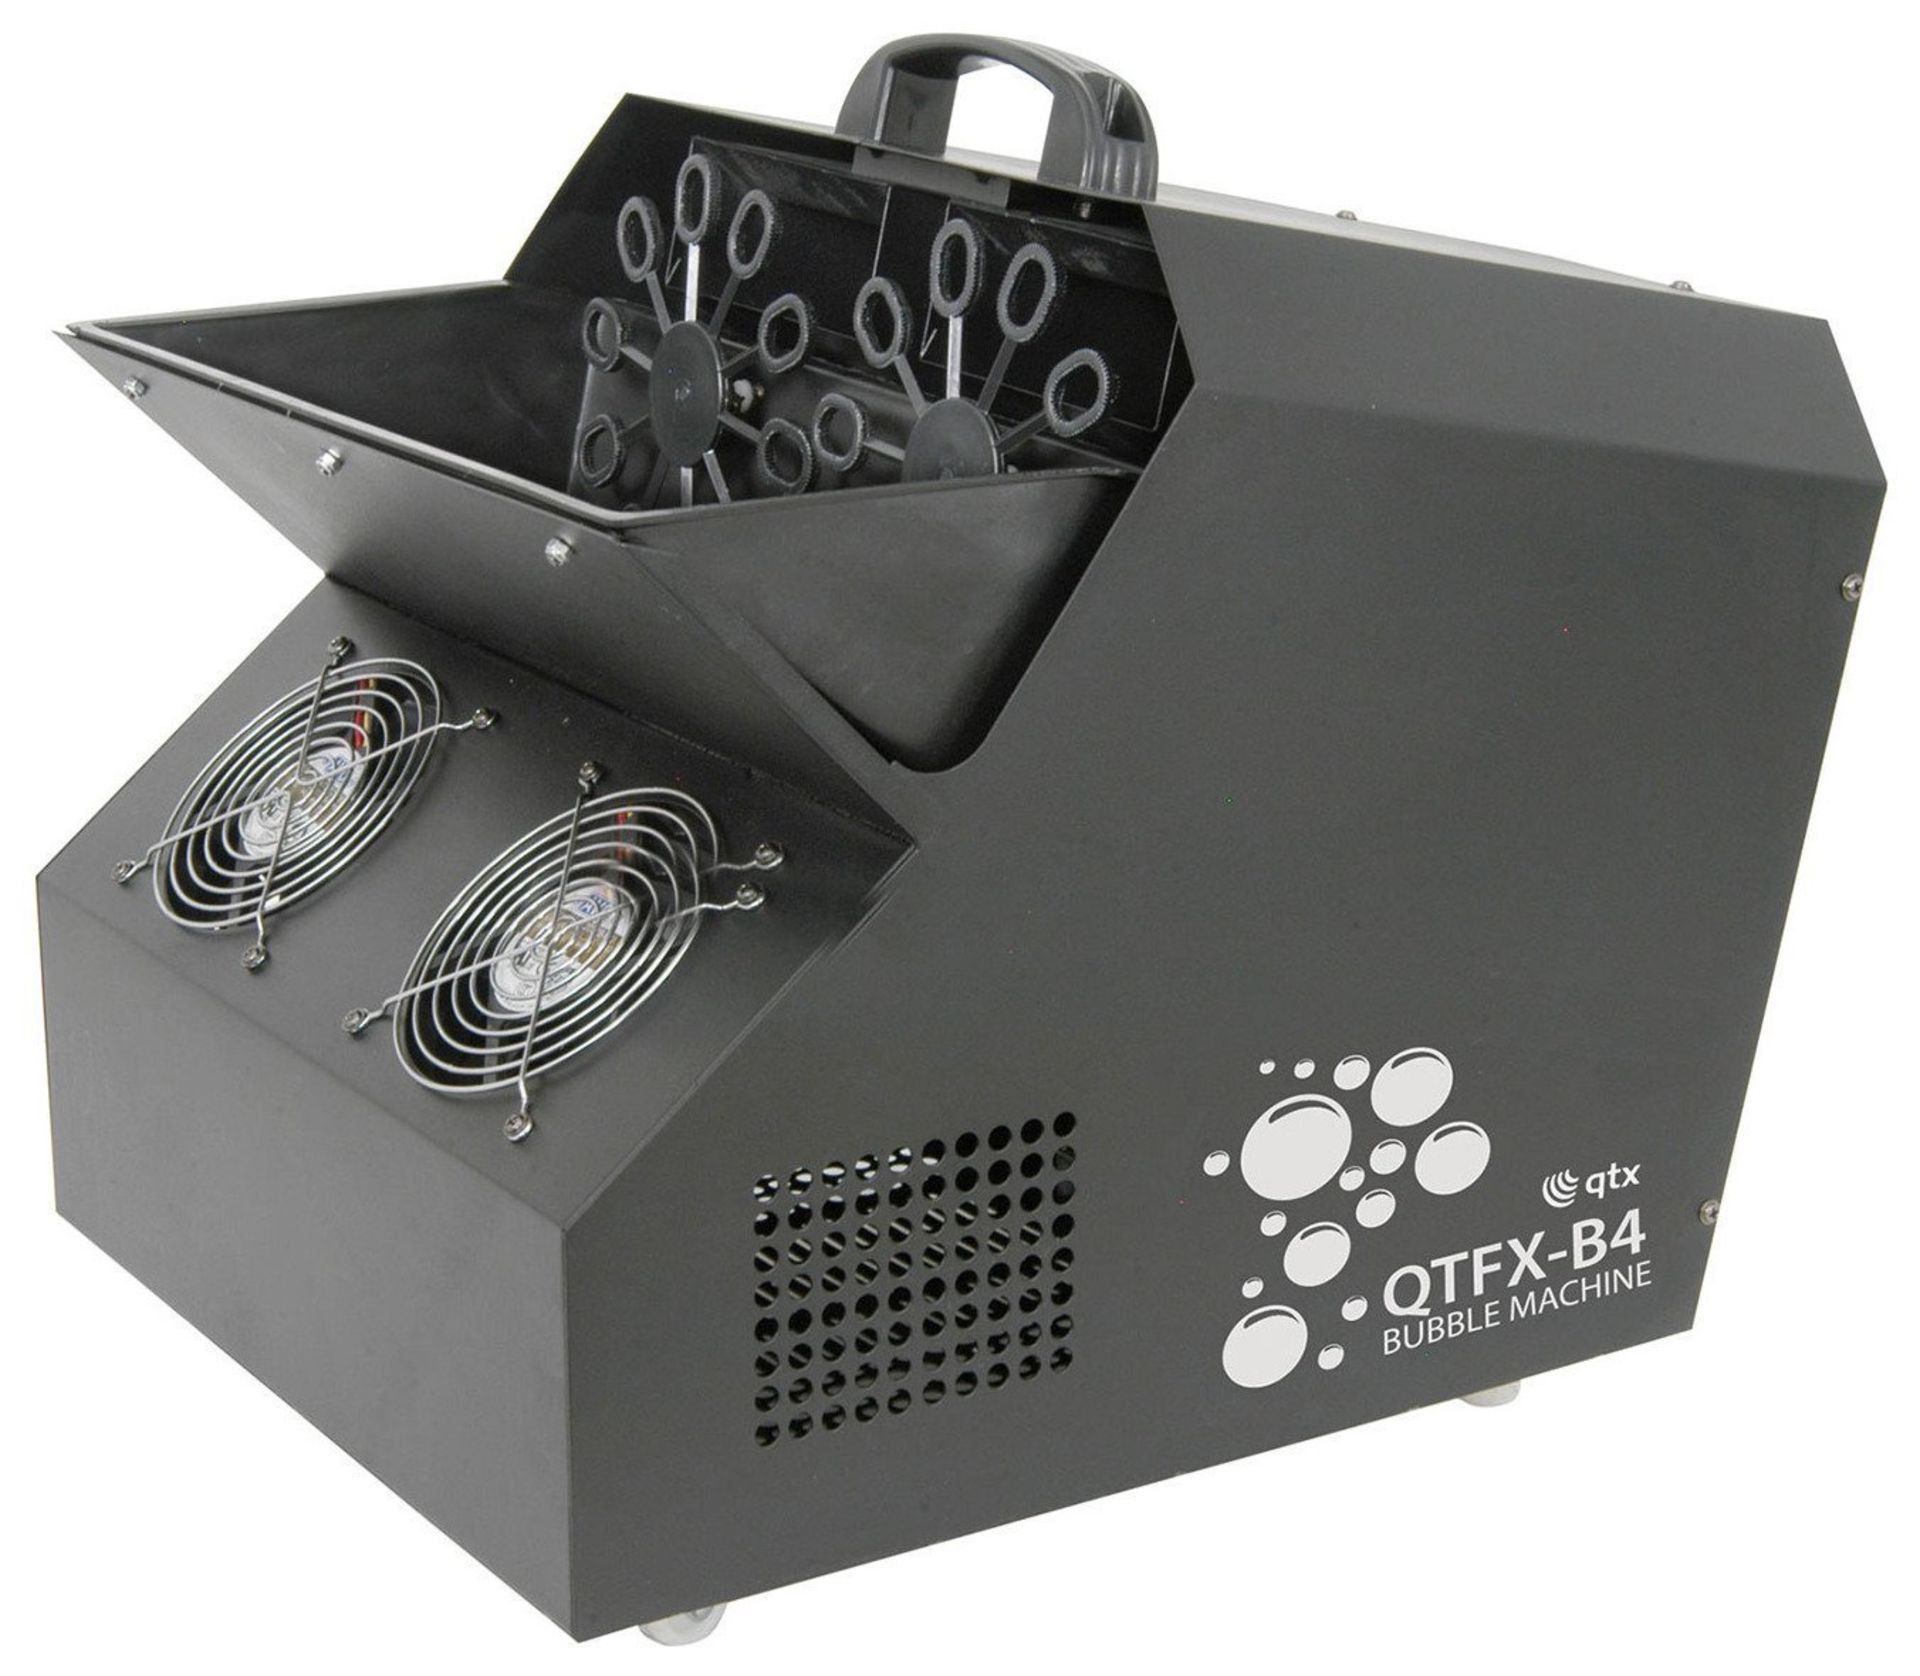 qtx QTFX-B4 Professional Bubble Machine RRP £299.99